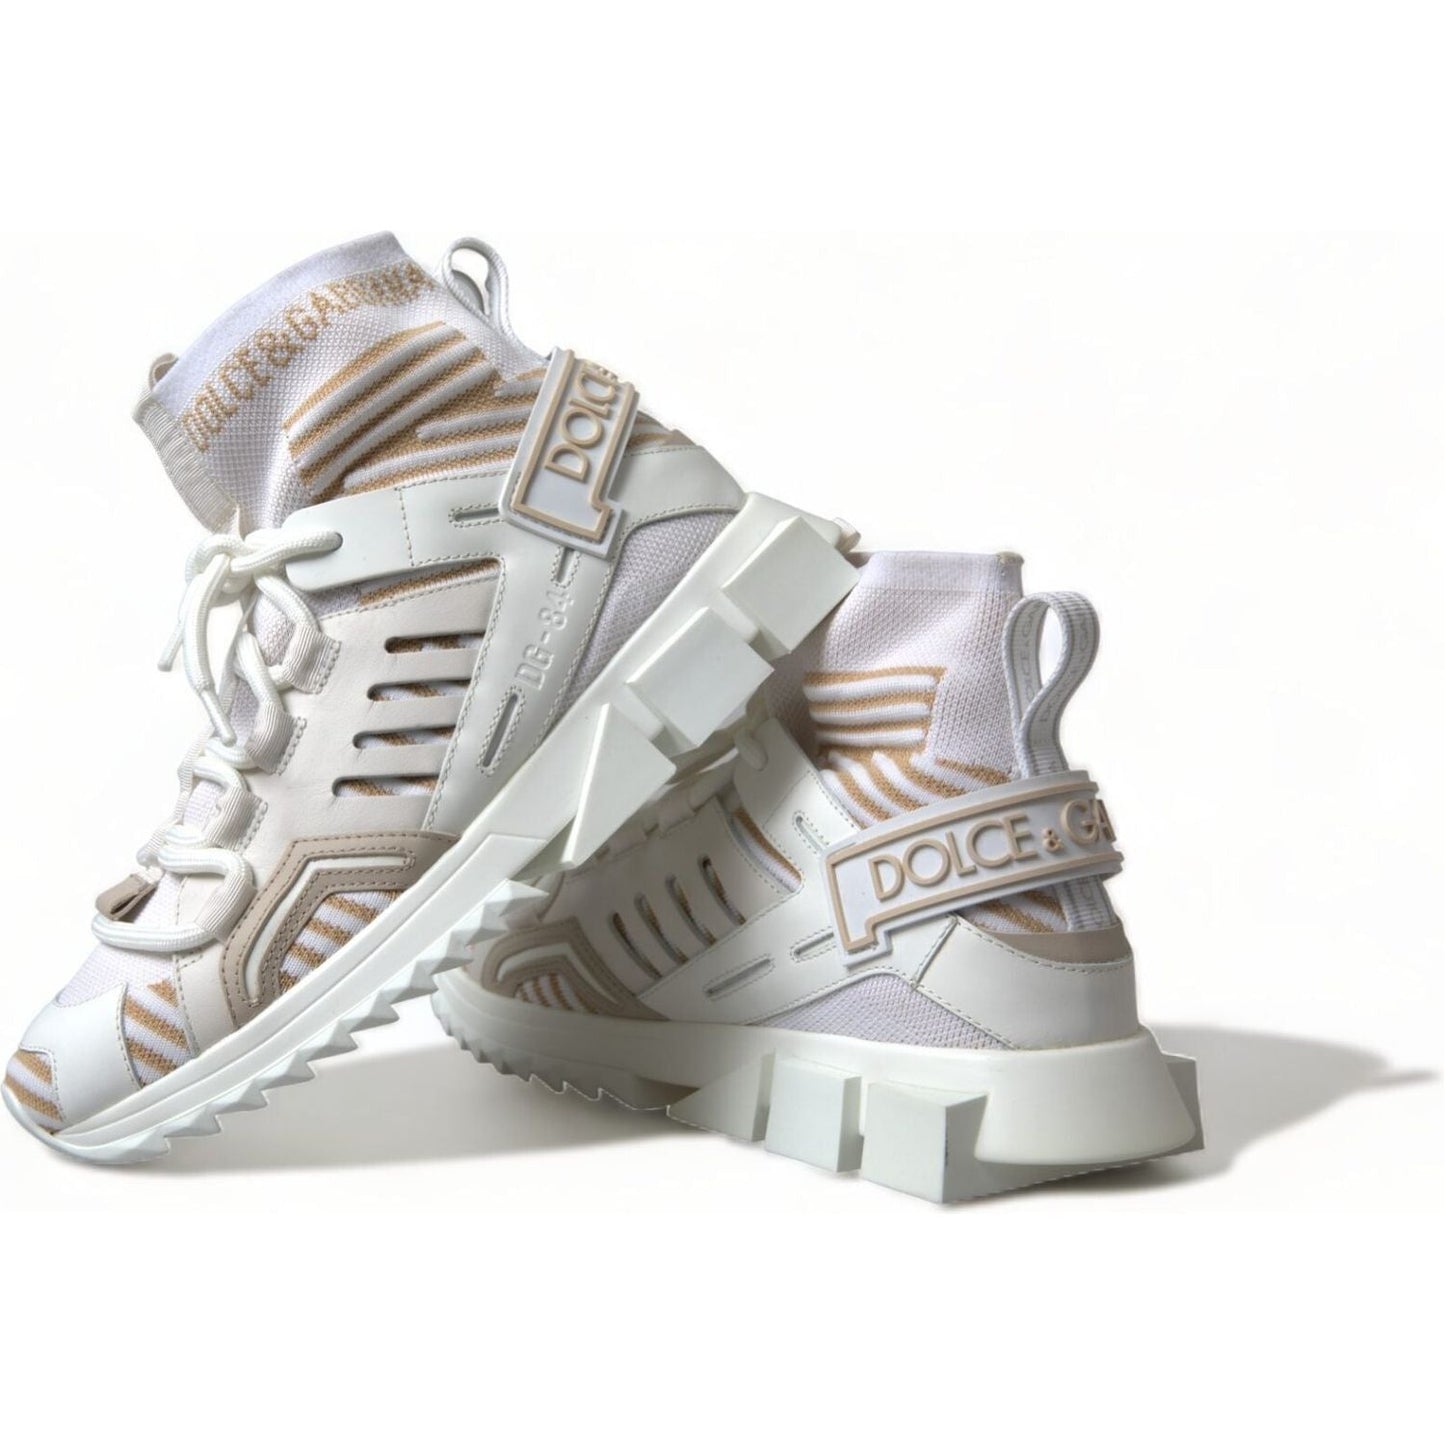 Dolce & Gabbana Elegant Sorrento Slip-On Sneakers in White and Beige white-beige-sorrento-socks-sneakers-shoes-1 465A2449-BG-scaled-6935dfe8-c90.jpg